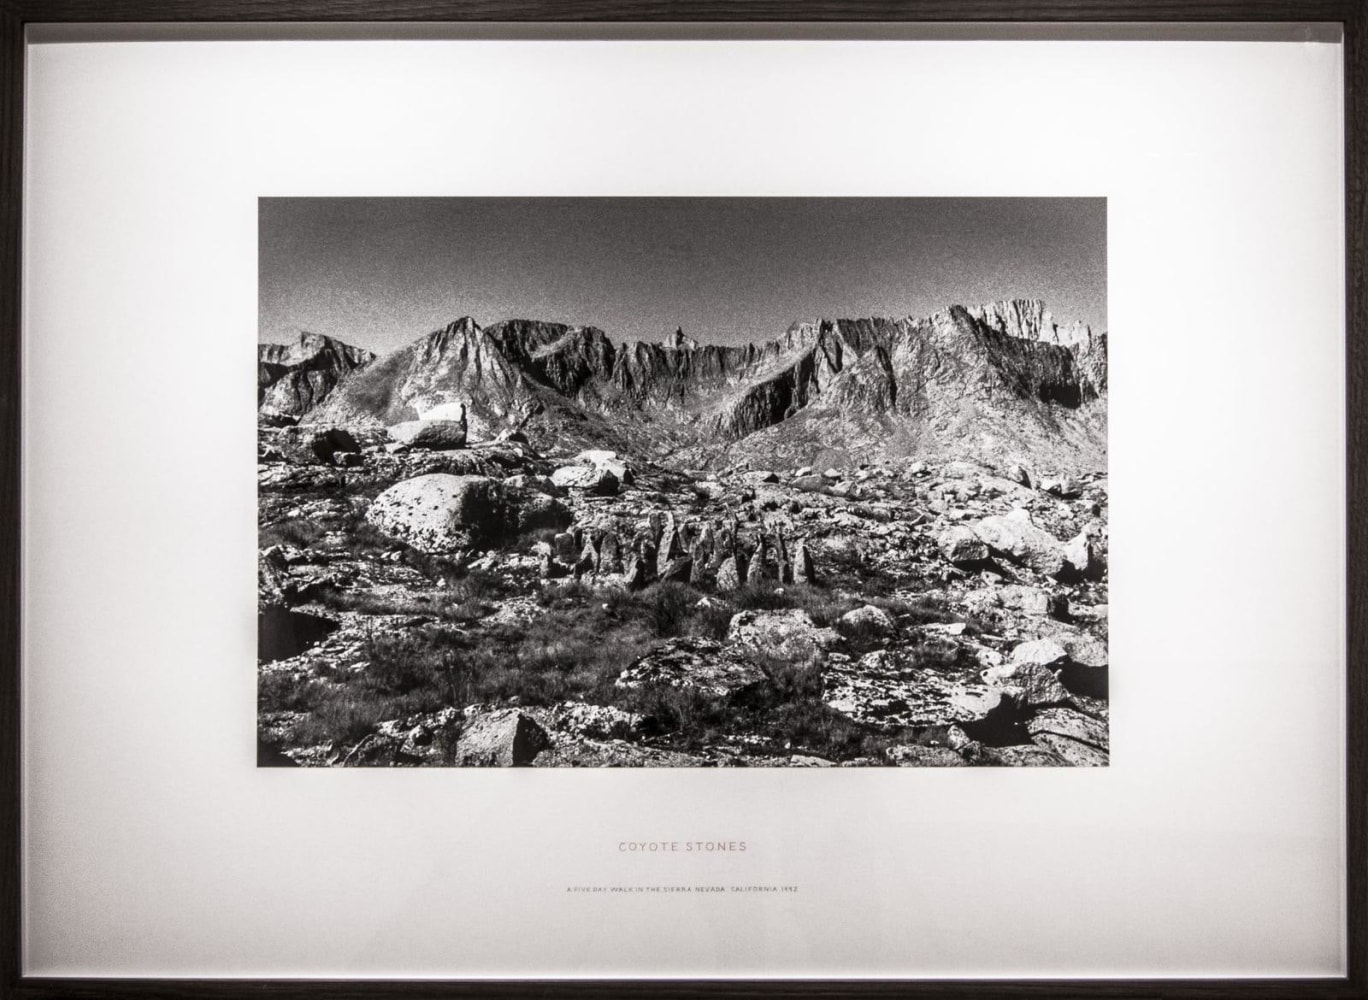 Richard Long
Coyote Stones (A Five-Day Walk in the Sierra Nevada, California, 1992), 1992
gelatin silver print
33 x 45 inches (83,8 x 114,3 cm) frame